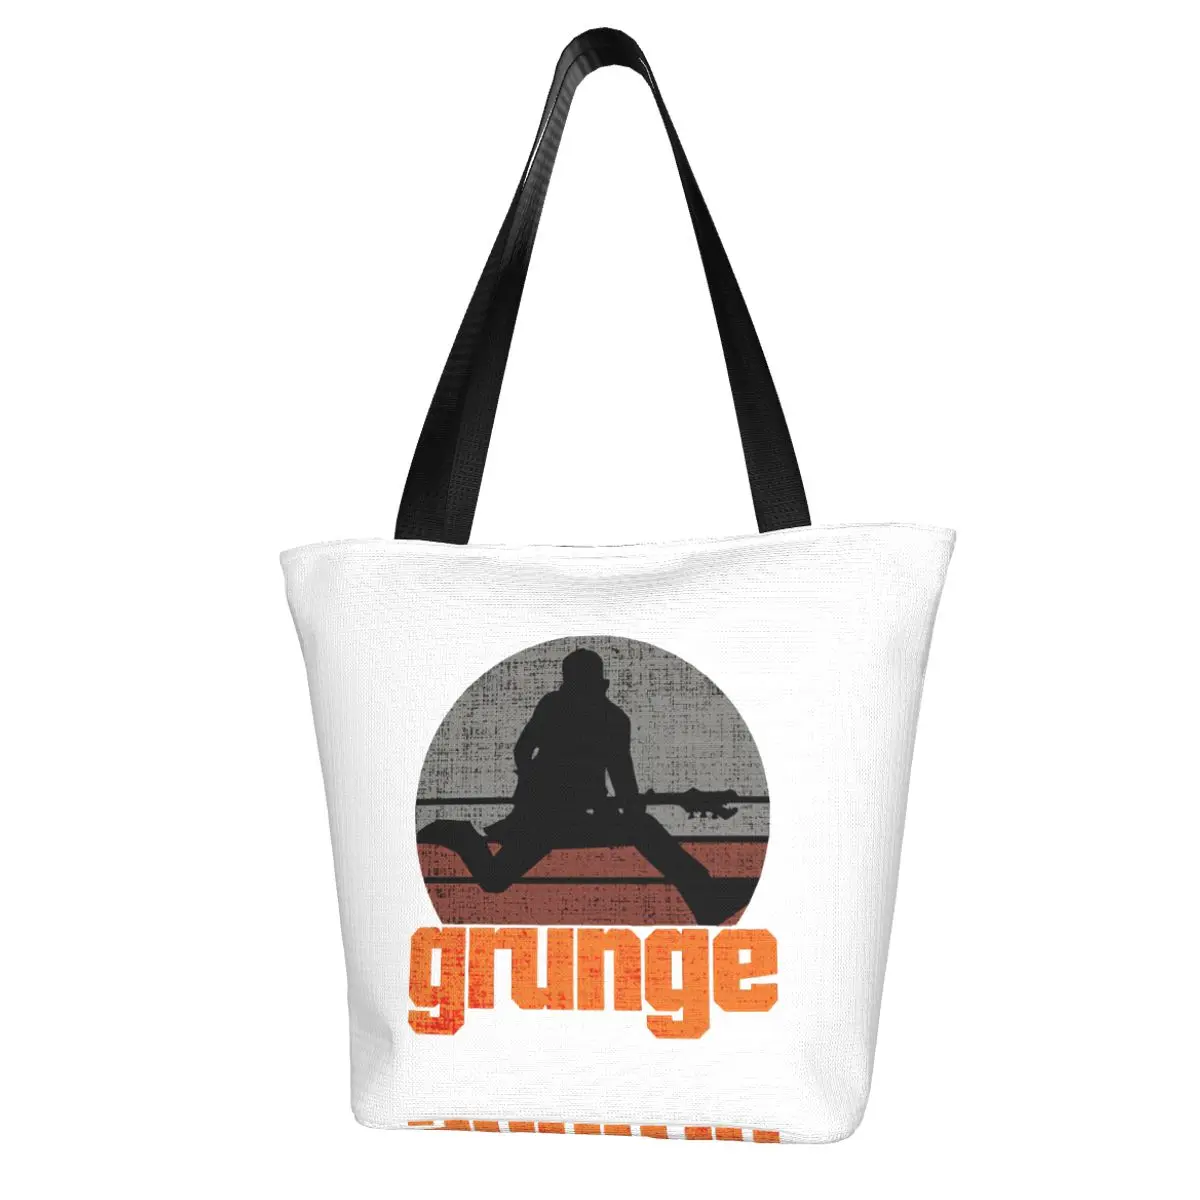 Grunge Shopping Bag Aesthetic Cloth Outdoor Handbag Female Fashion Bags